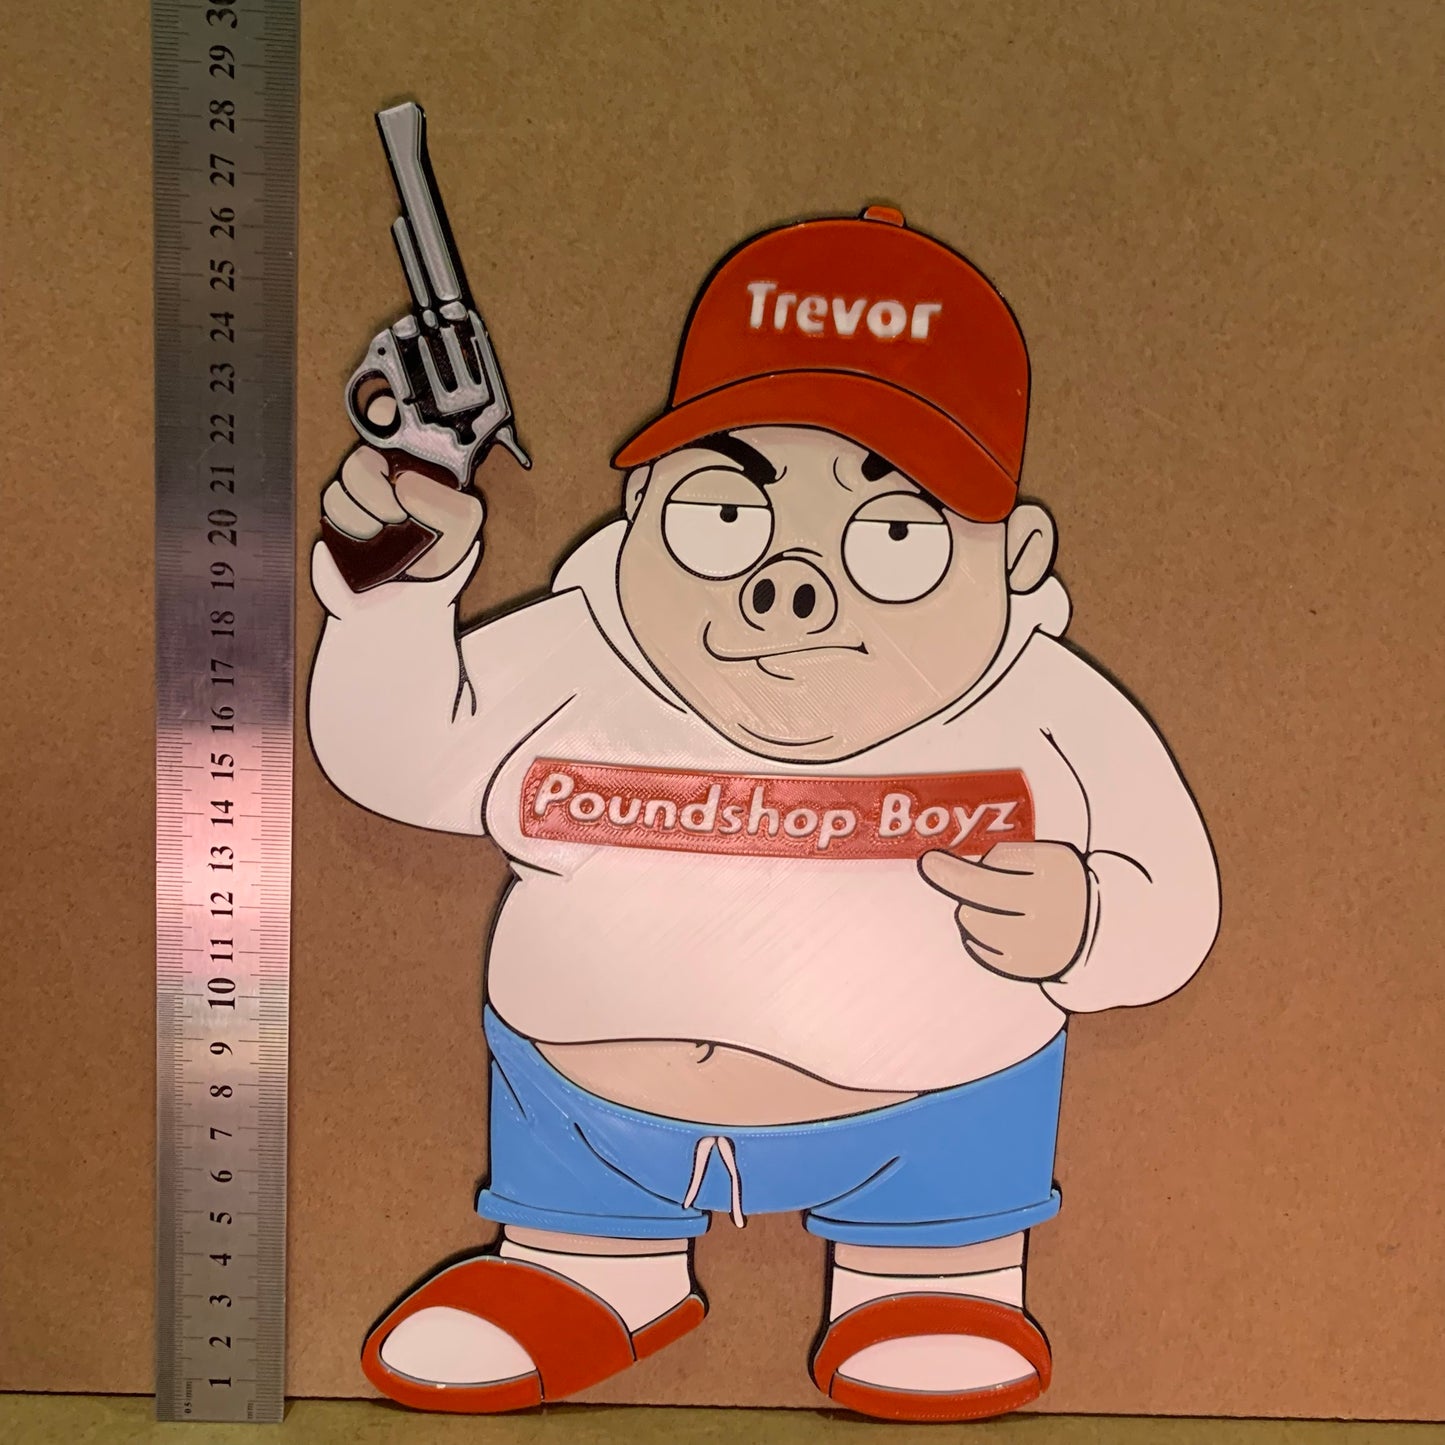 Trevor with Revolver